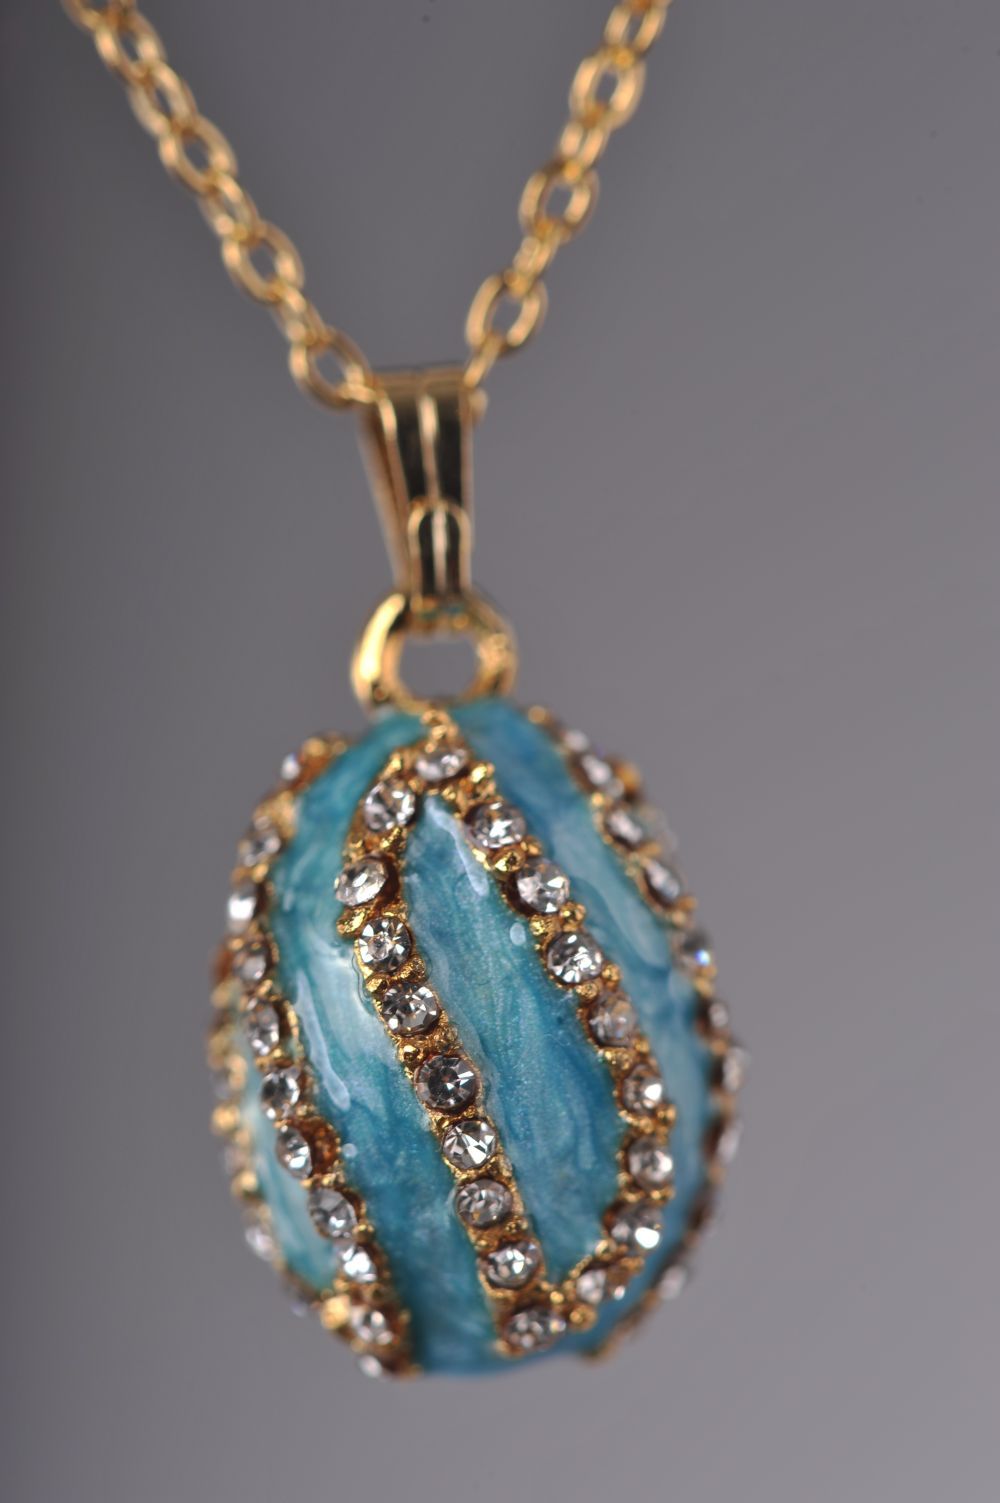 Turquoise Spiral Pendant Necklace pendant Keren Kopal